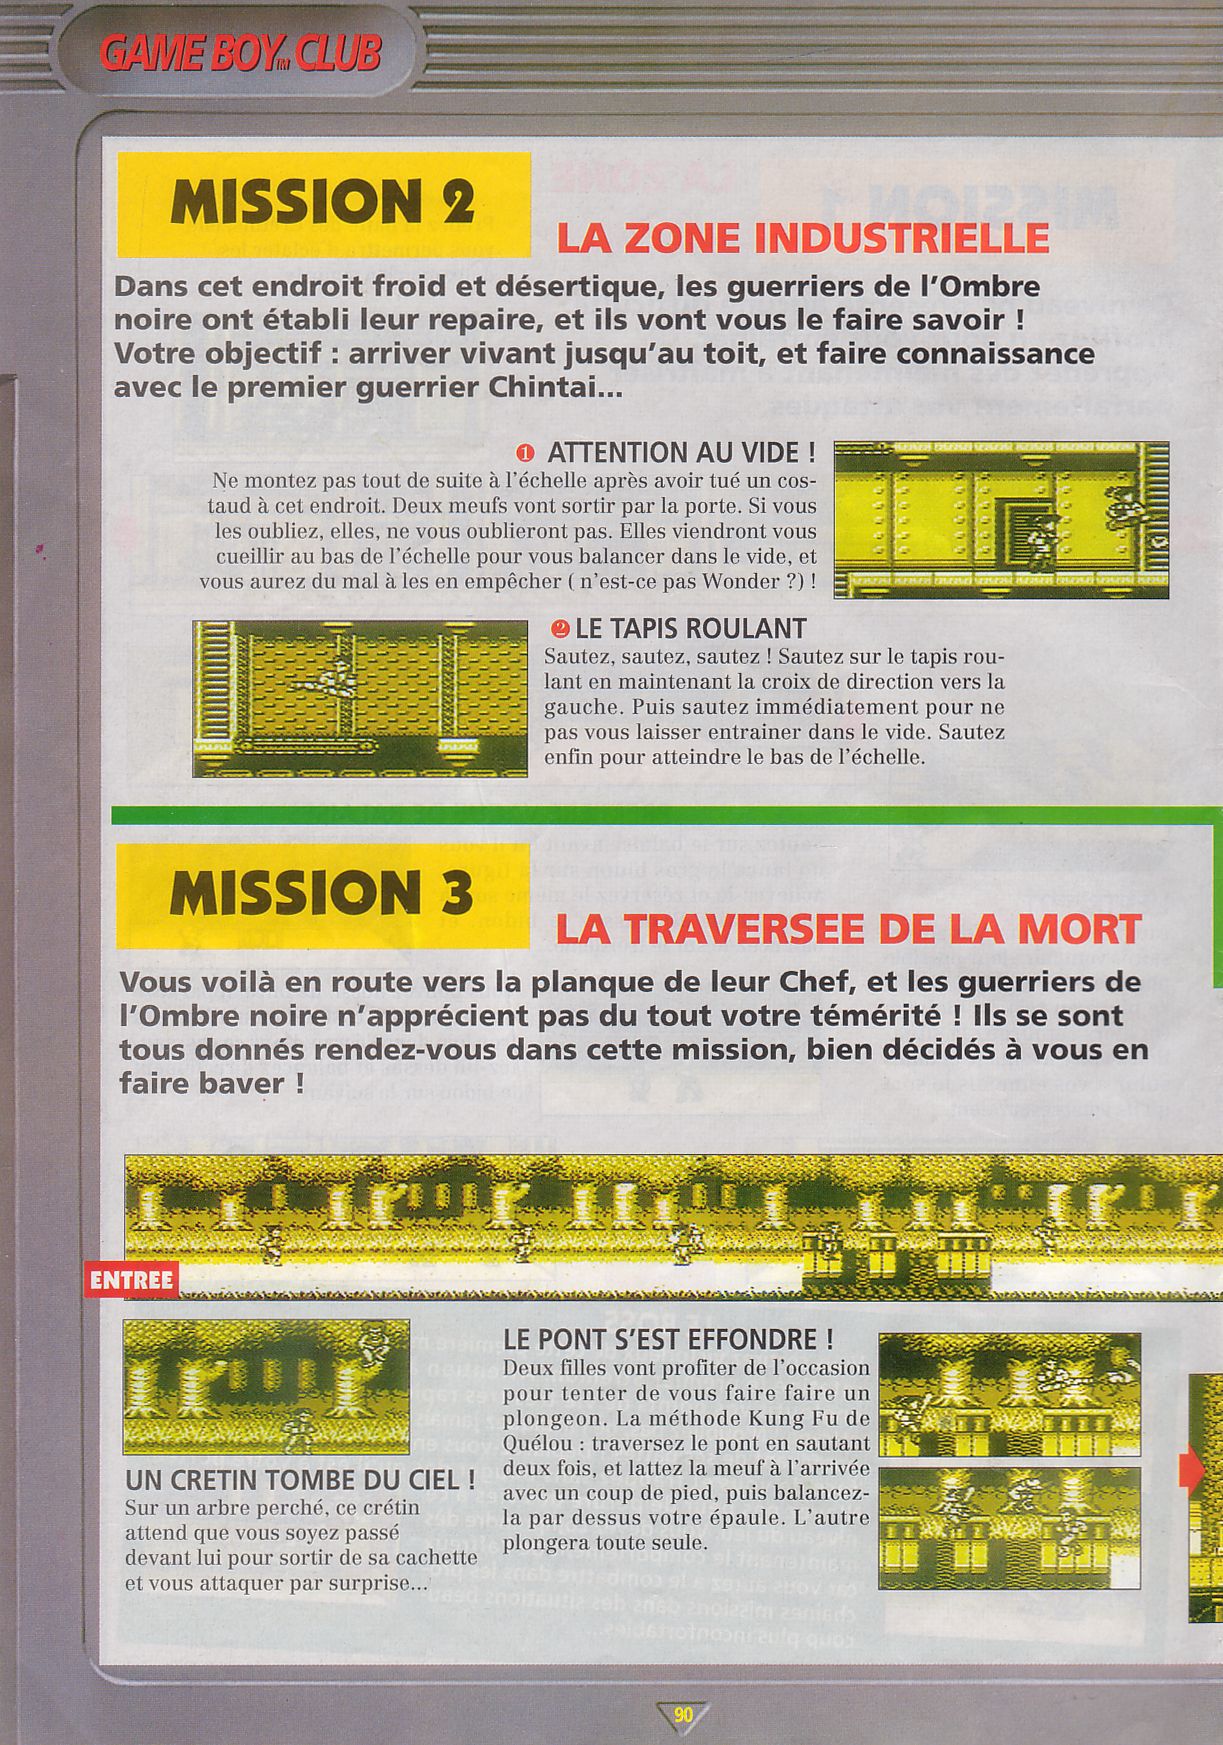 tests//695/Nintendo Player 005 - Page 090 (1992-07-08).jpg